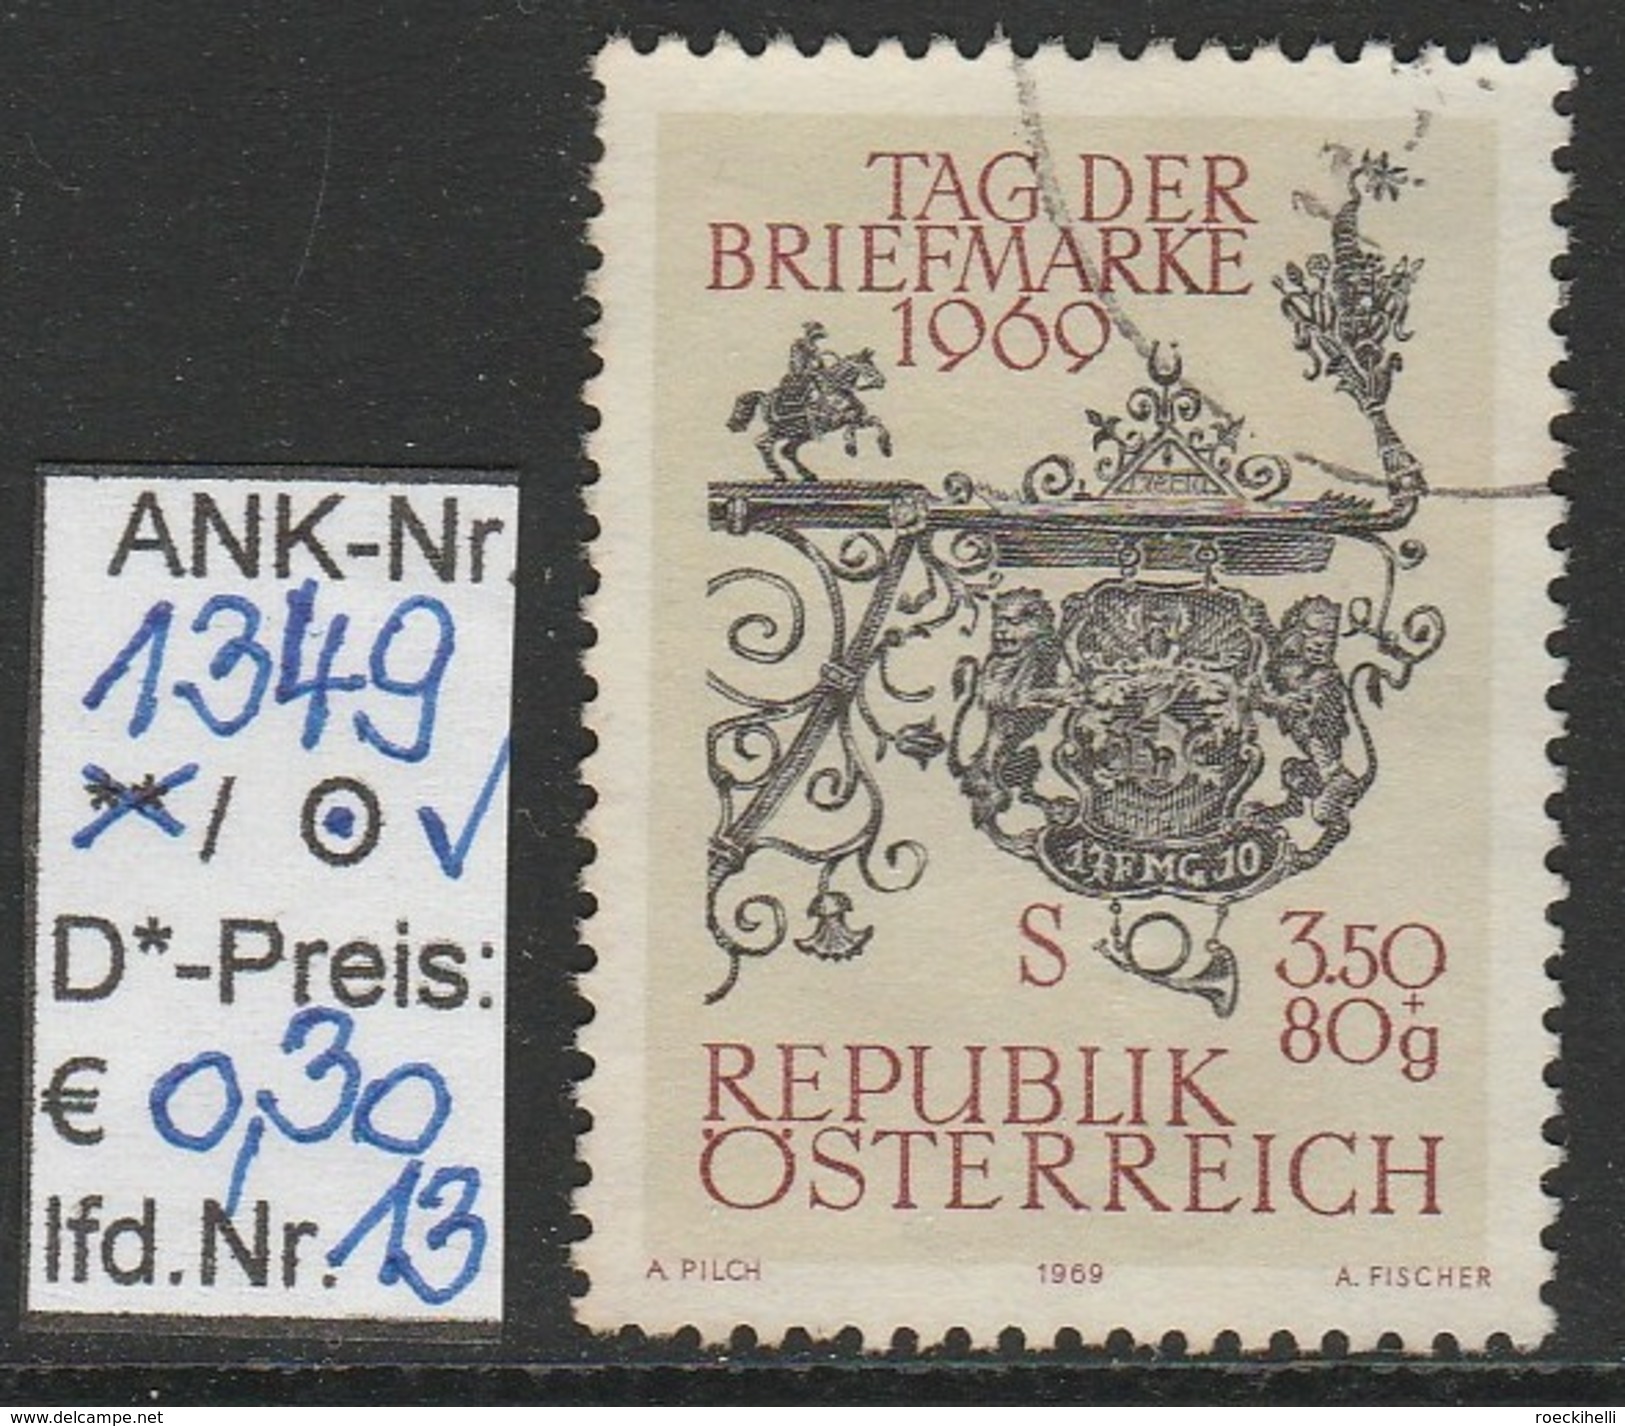 5.12.1969  -  SM  "Tag der Briefmarke 1969" -  o   gestempelt  -  siehe Scan  (1349o 01-14)